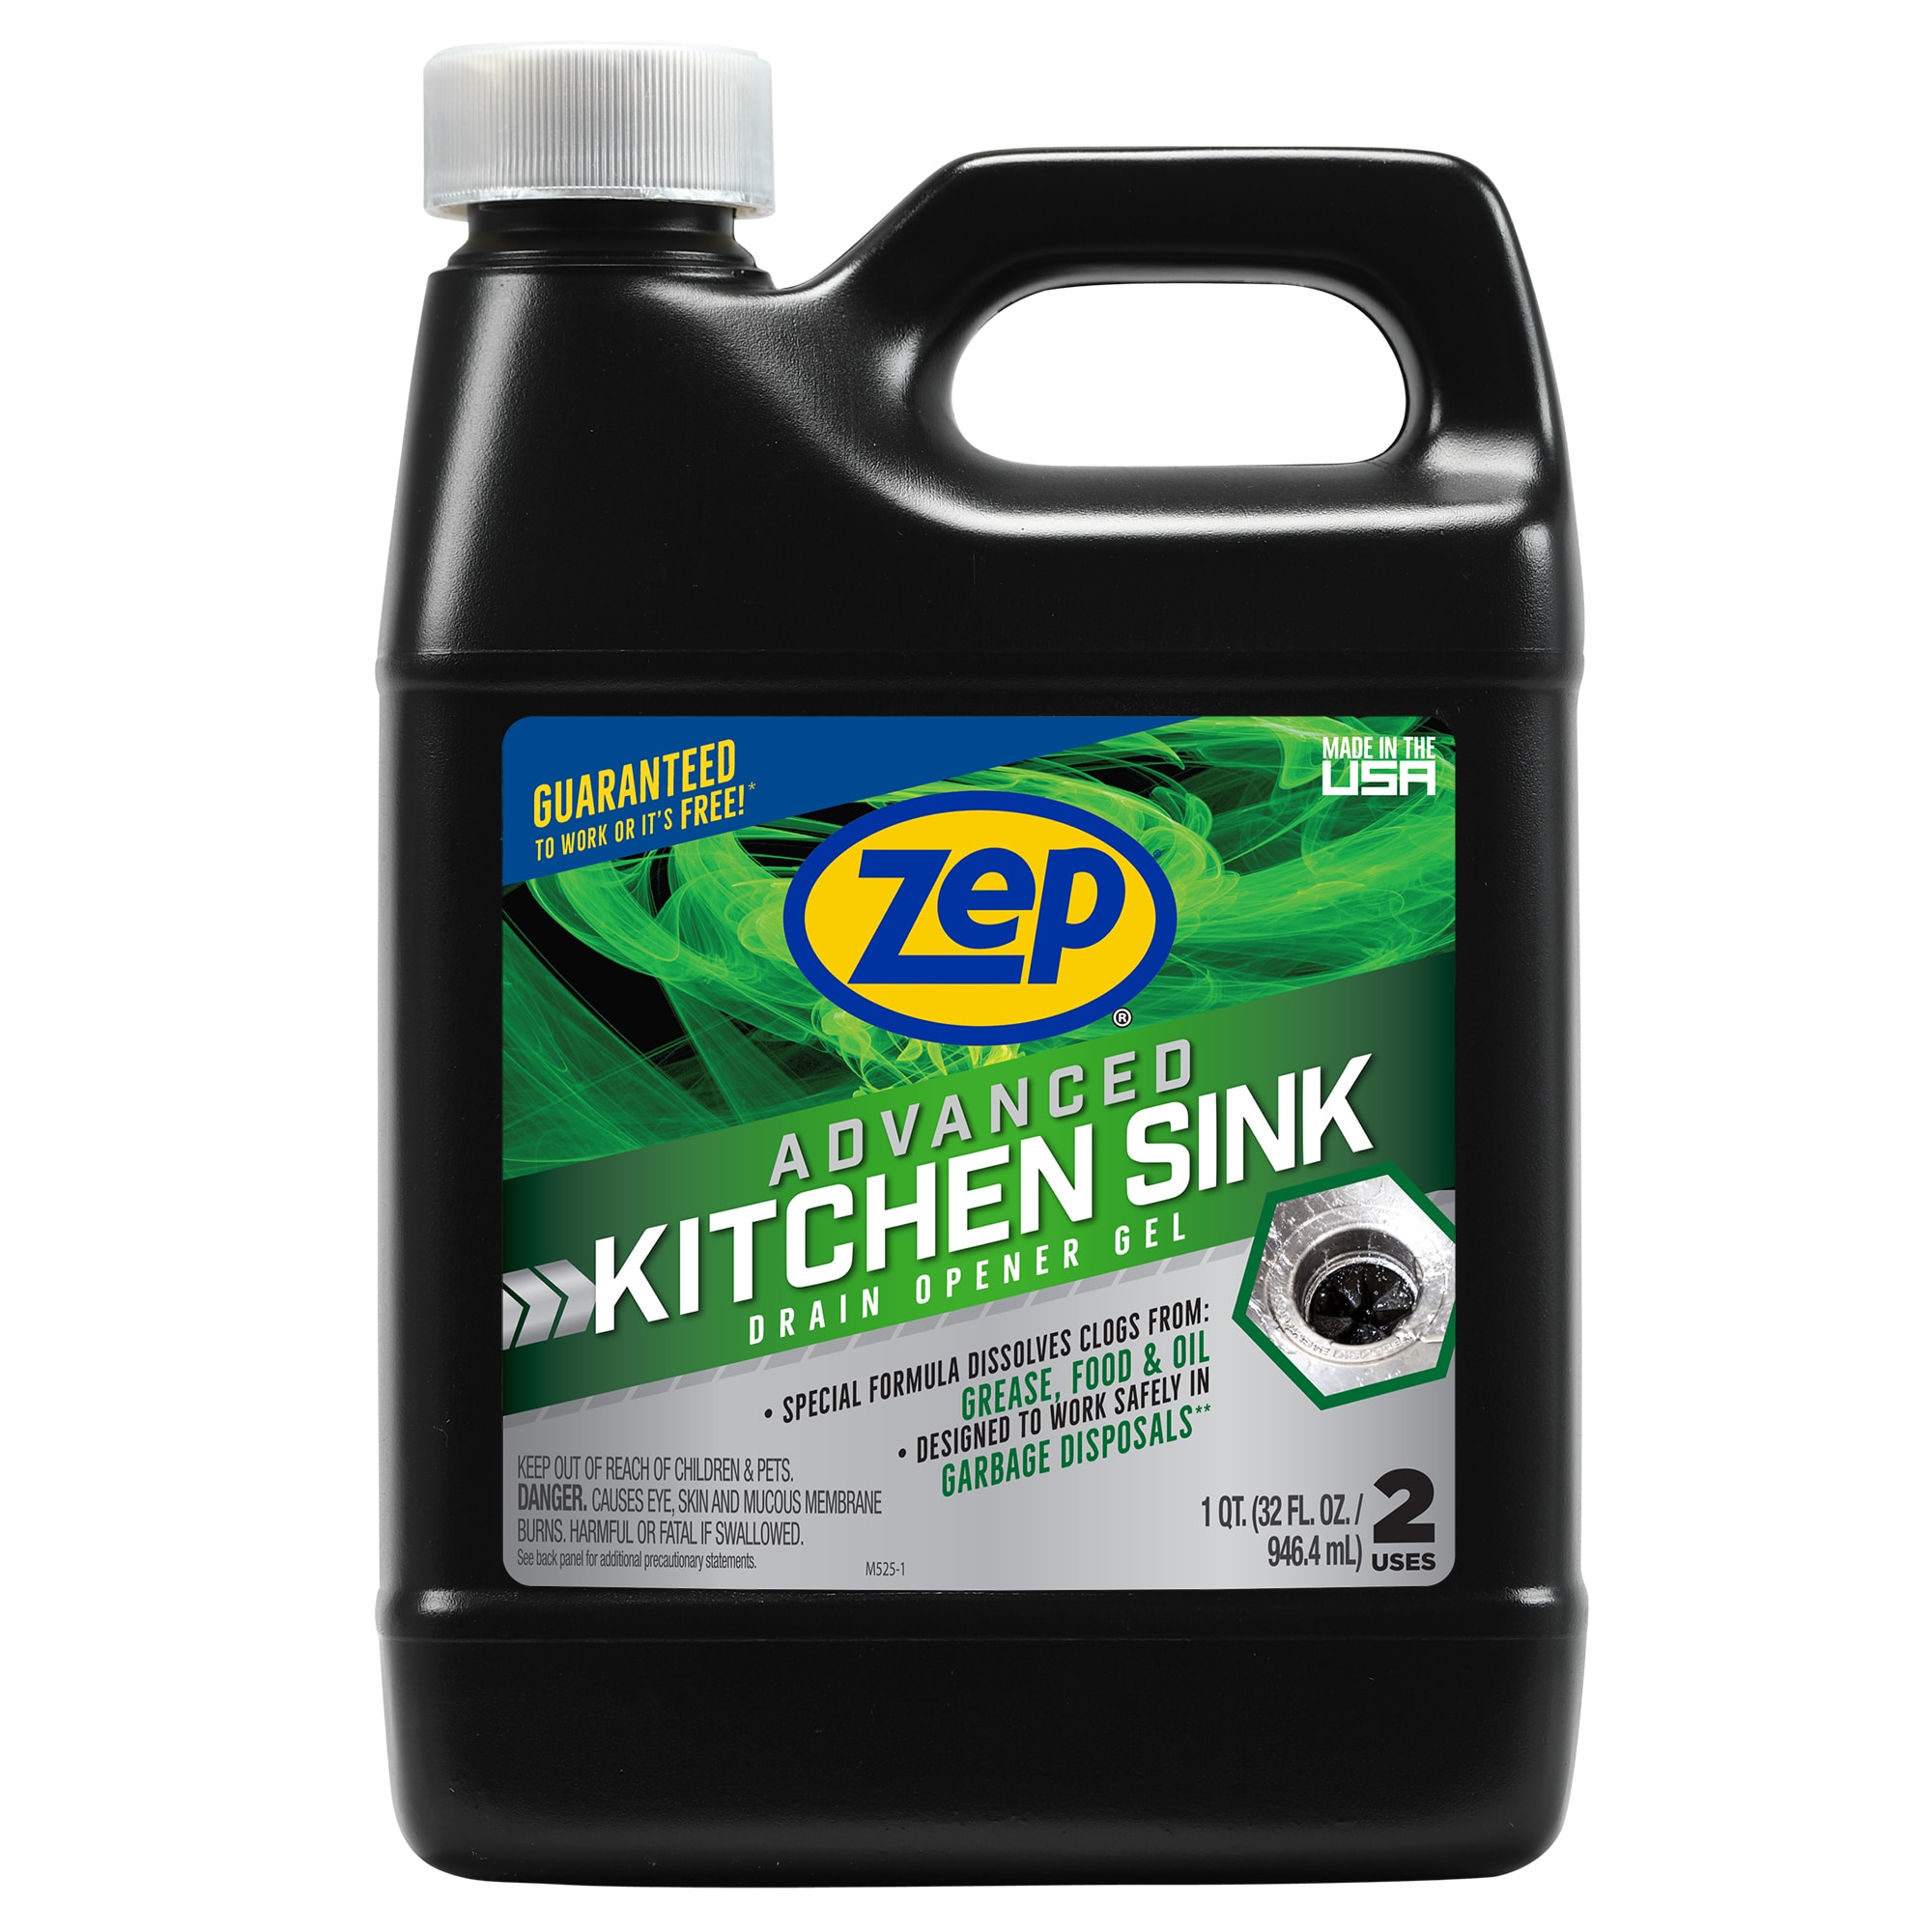 Zep 32 oz. Advanced Kitchen Drain Opener